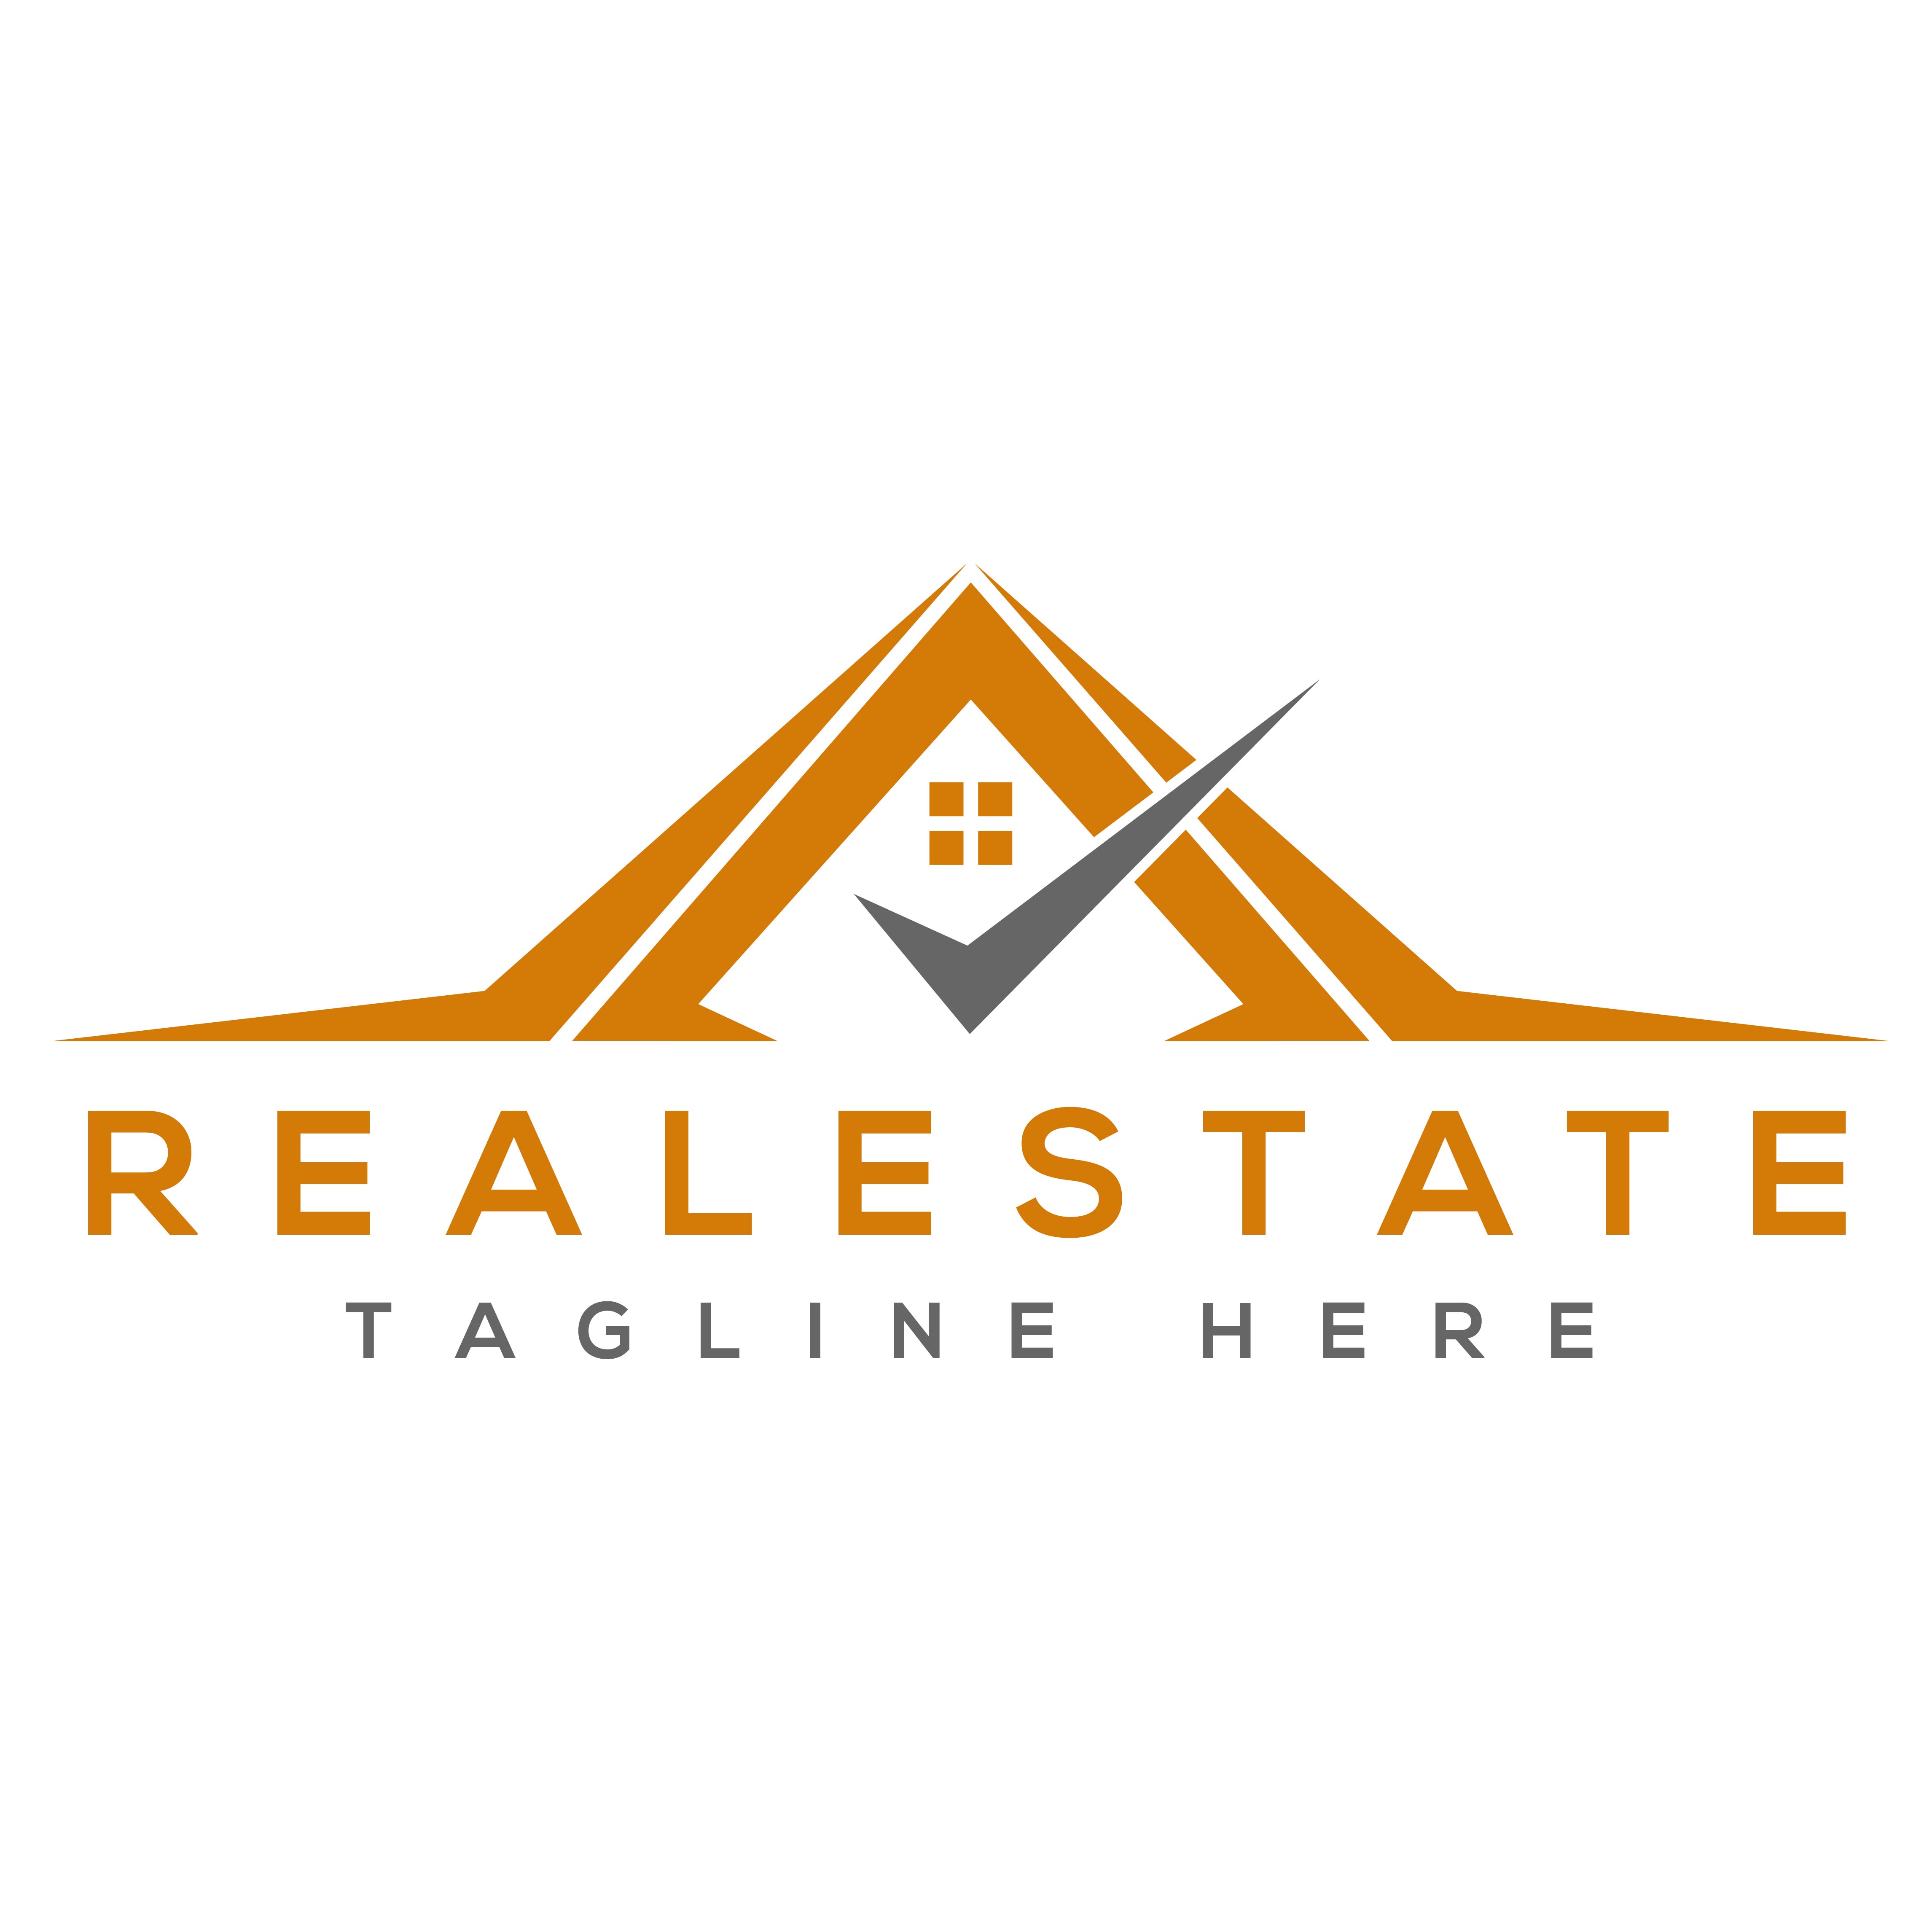 Real Estate Logo Design cover image.